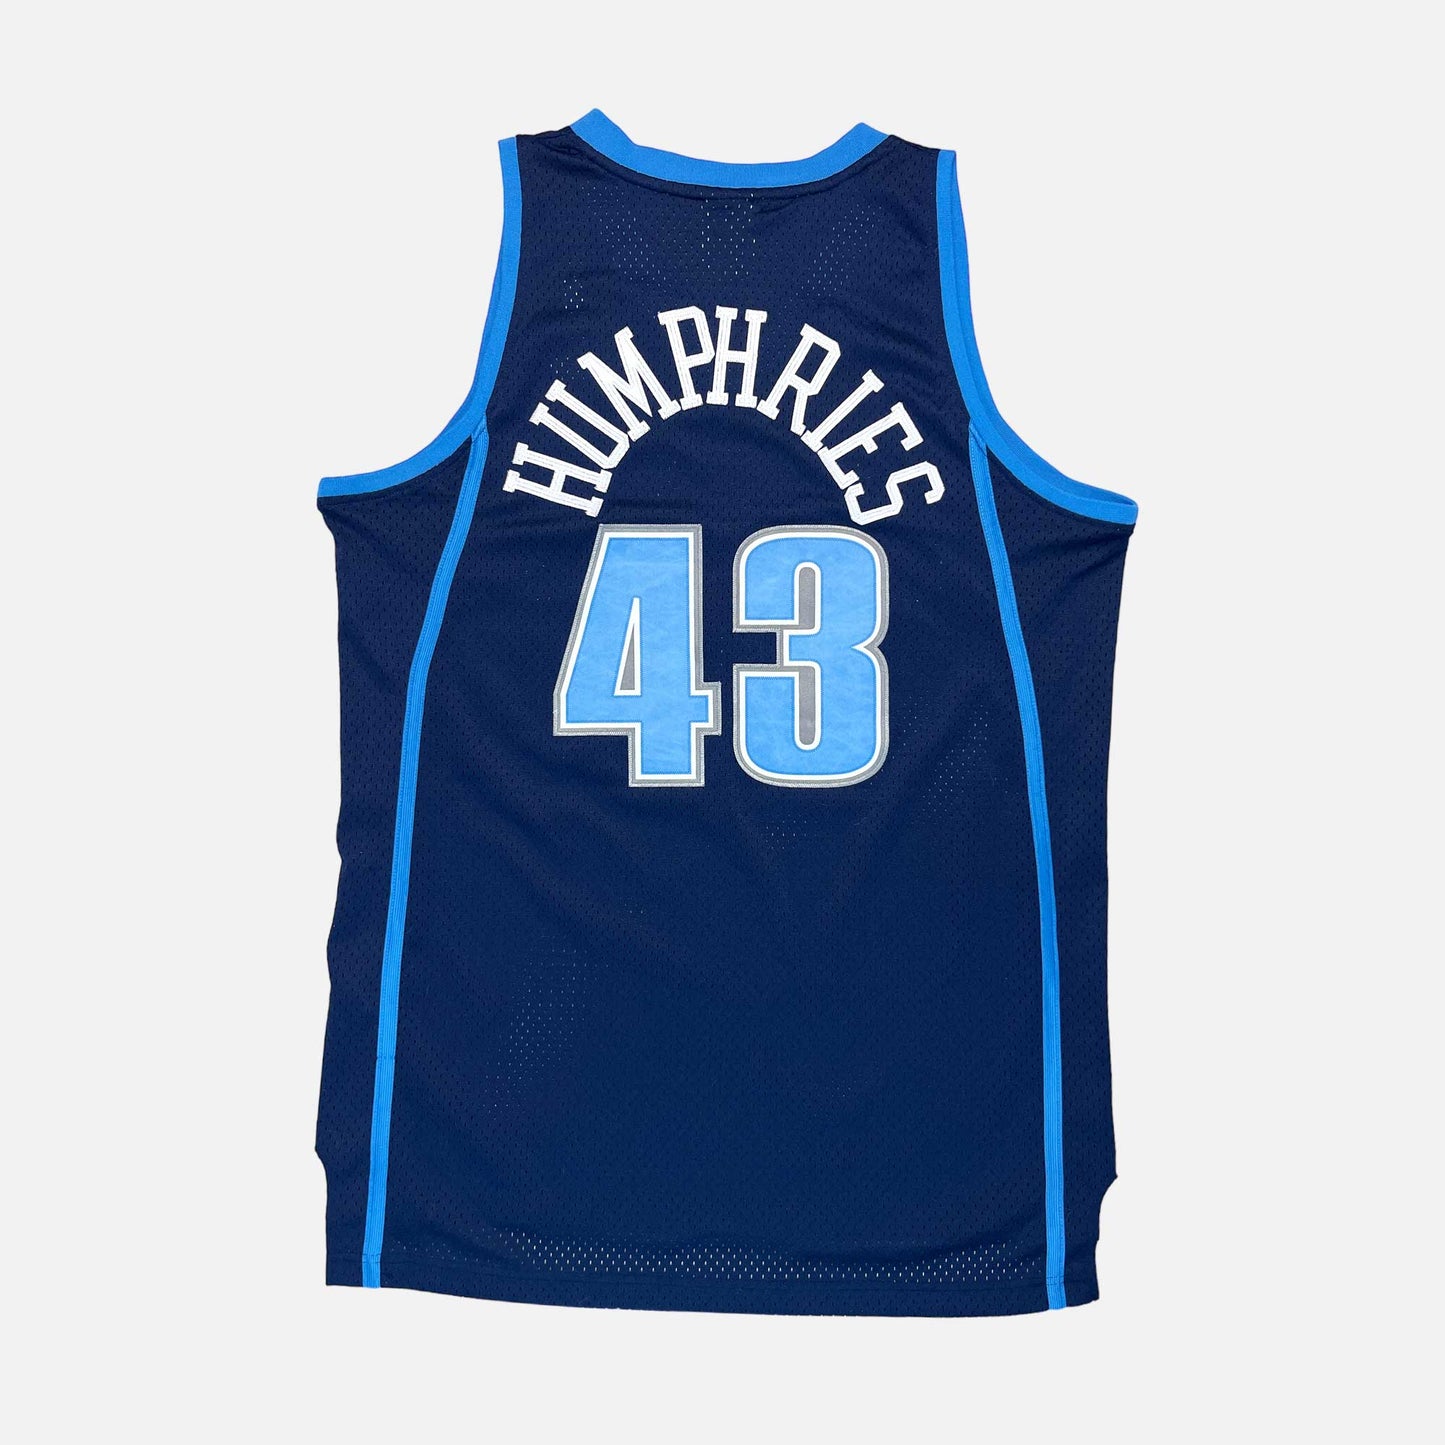 Utah Jazz - Kris Humphries - Größe L - Reebok - NBA Trikot